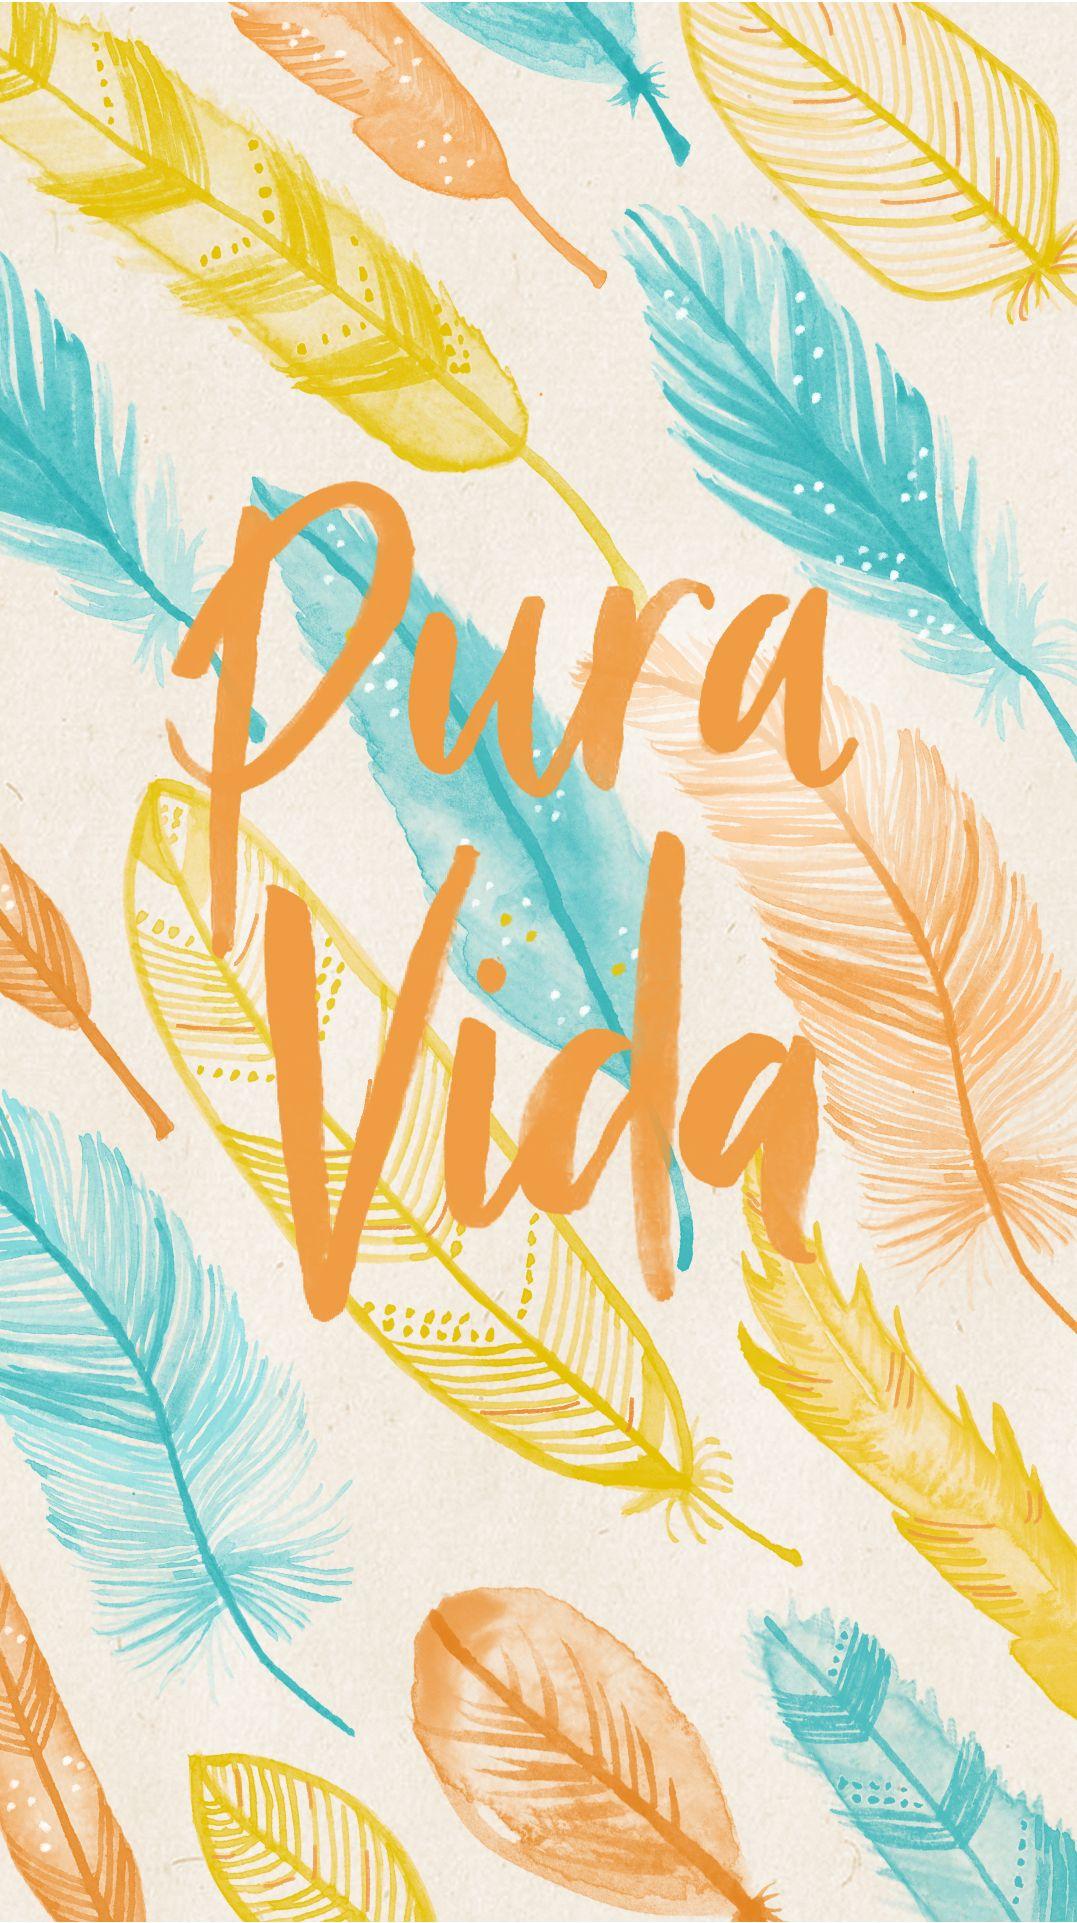 The Pura Vida Bracelets Blog in Love Digi Downloads. iPhone